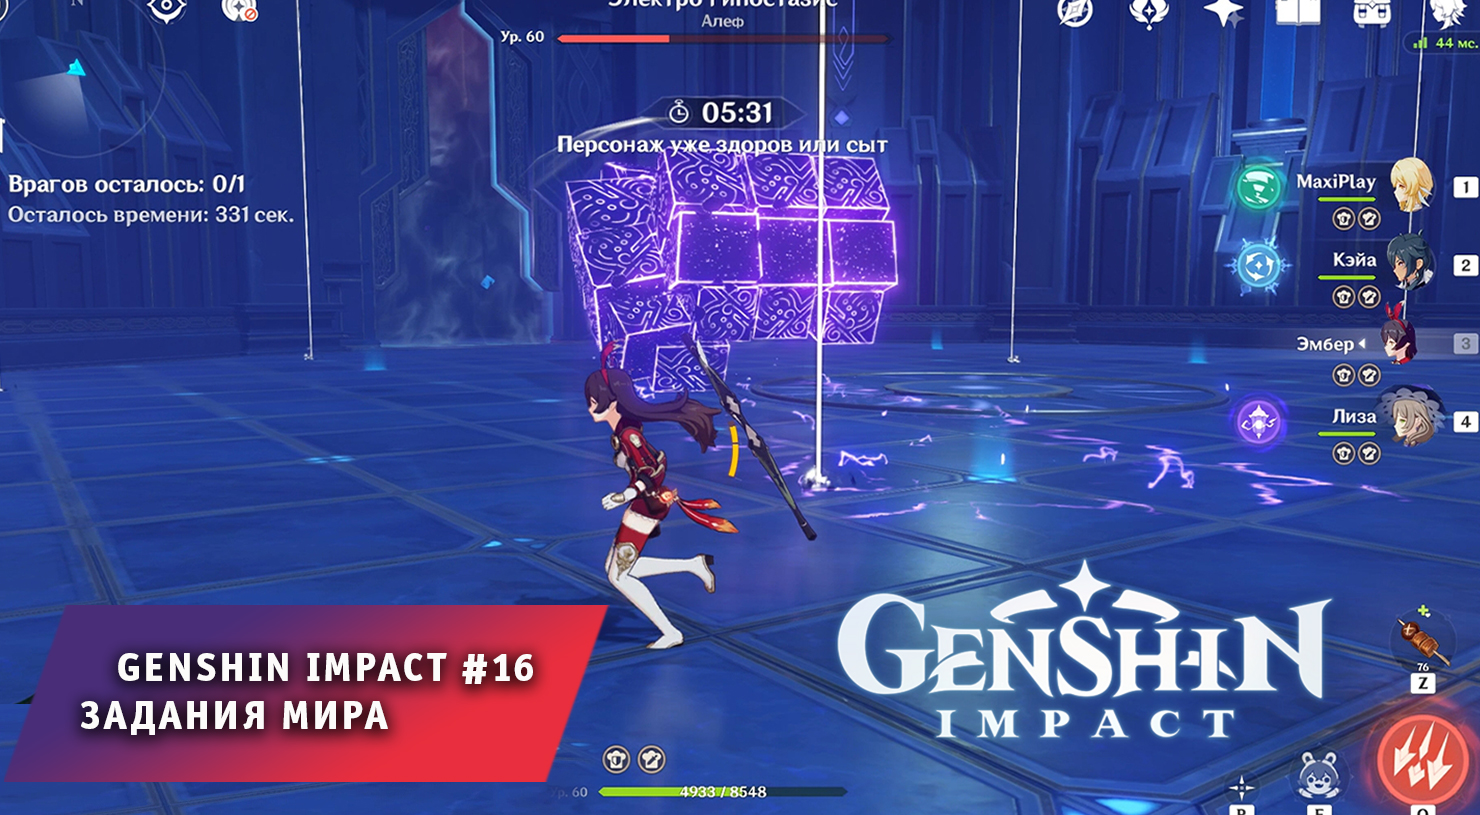 Версия игры геншин импакт. Genshin Impact 16. ГЕНШИ Импакт игра. Мини игры Геншин Импакт.